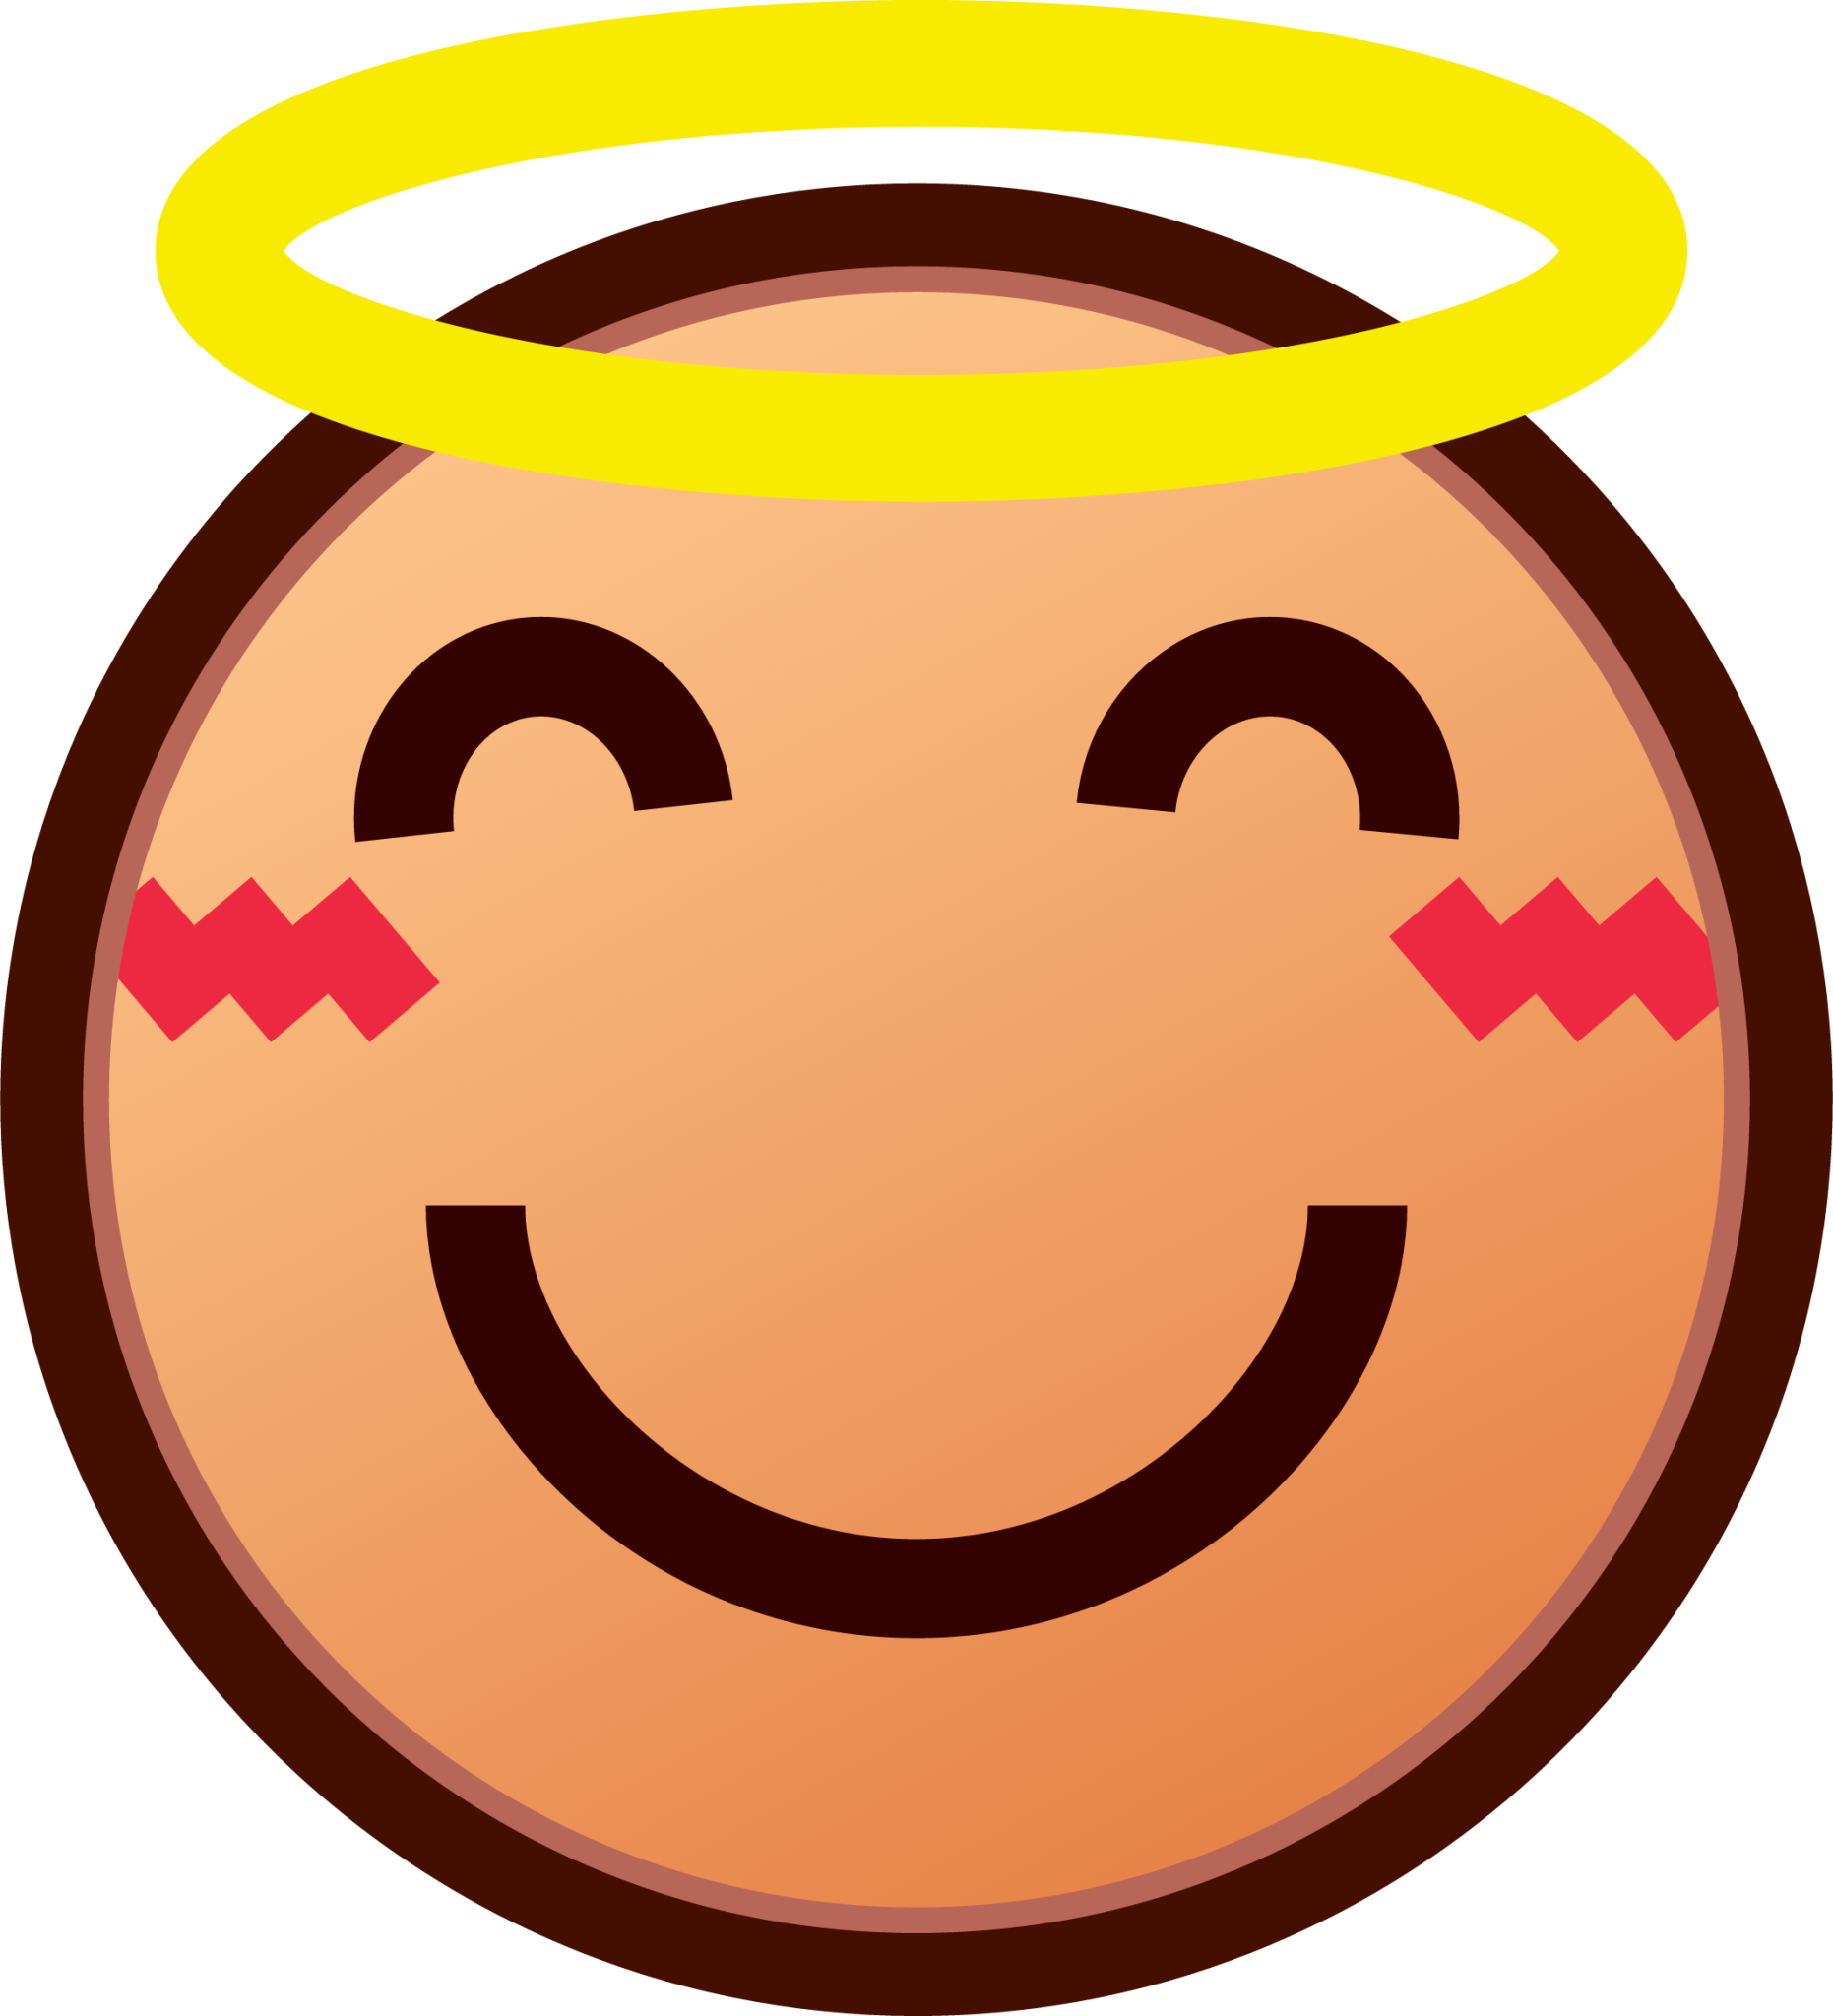 innocent (yellow) emoji